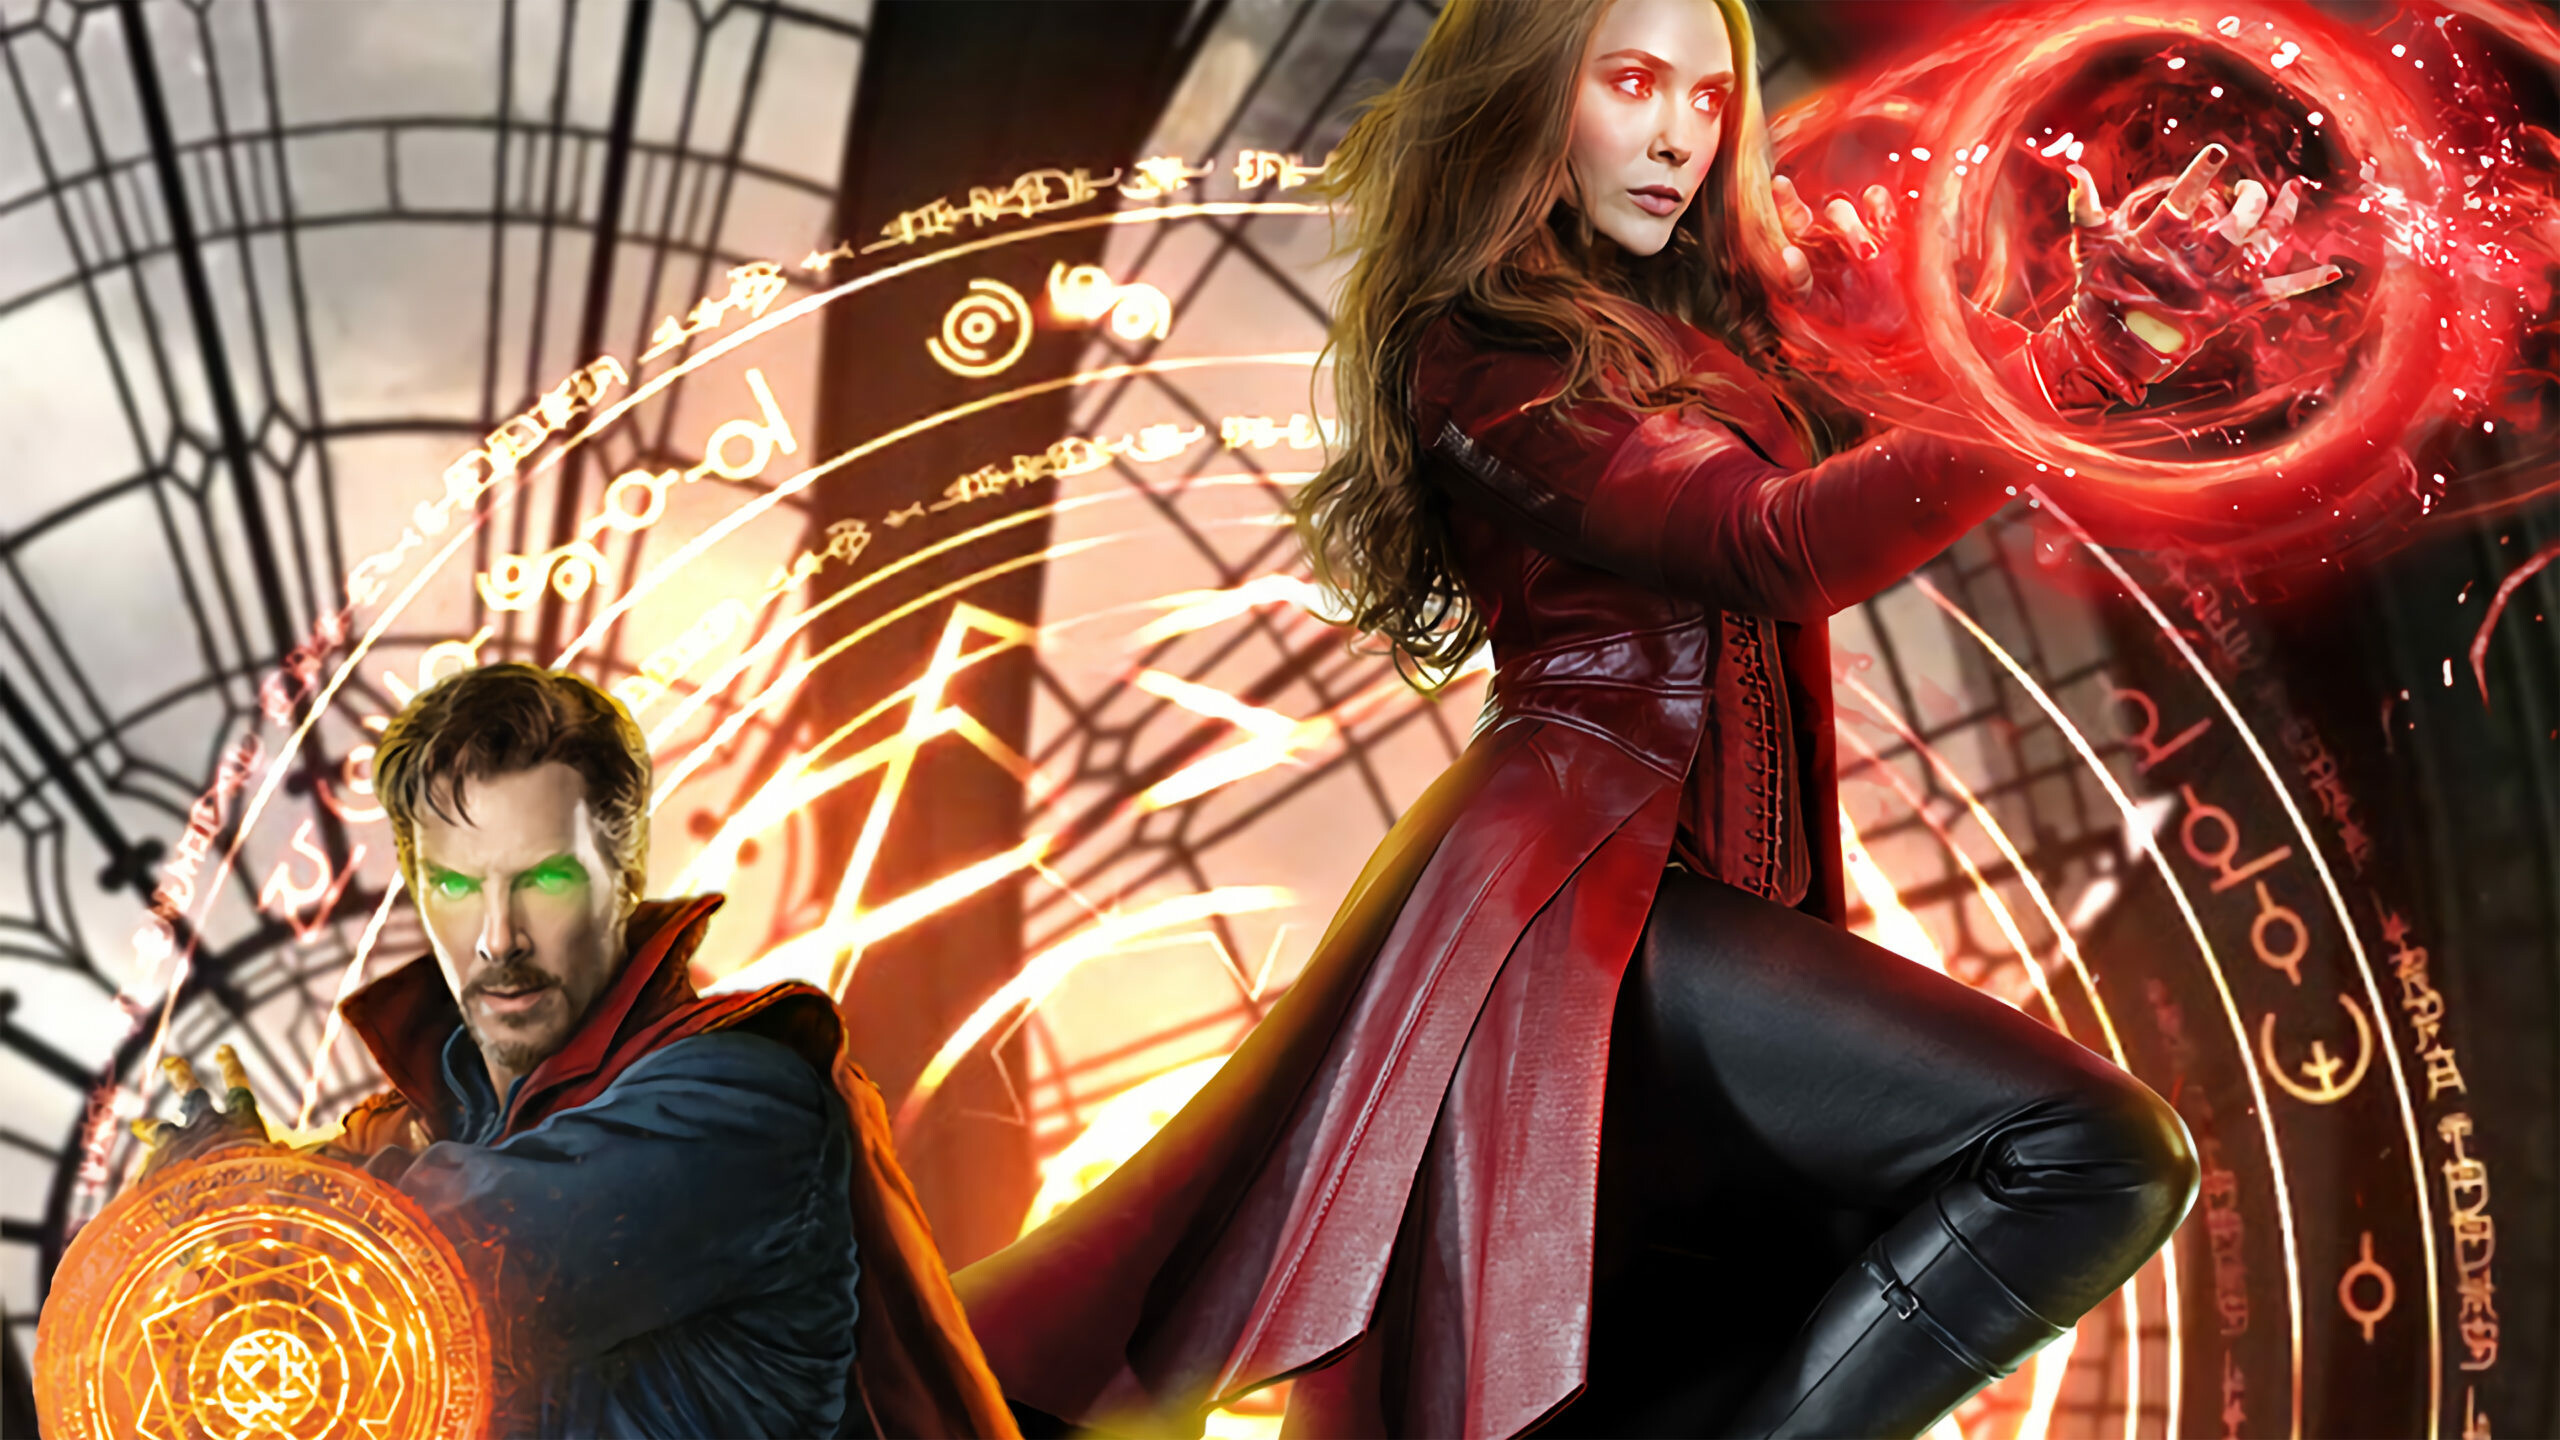 Doctor Strange in the Multiverse of Madness: The film stars Benedict Cumberbatch alongside Elizabeth Olsen. 2560x1440 HD Wallpaper.